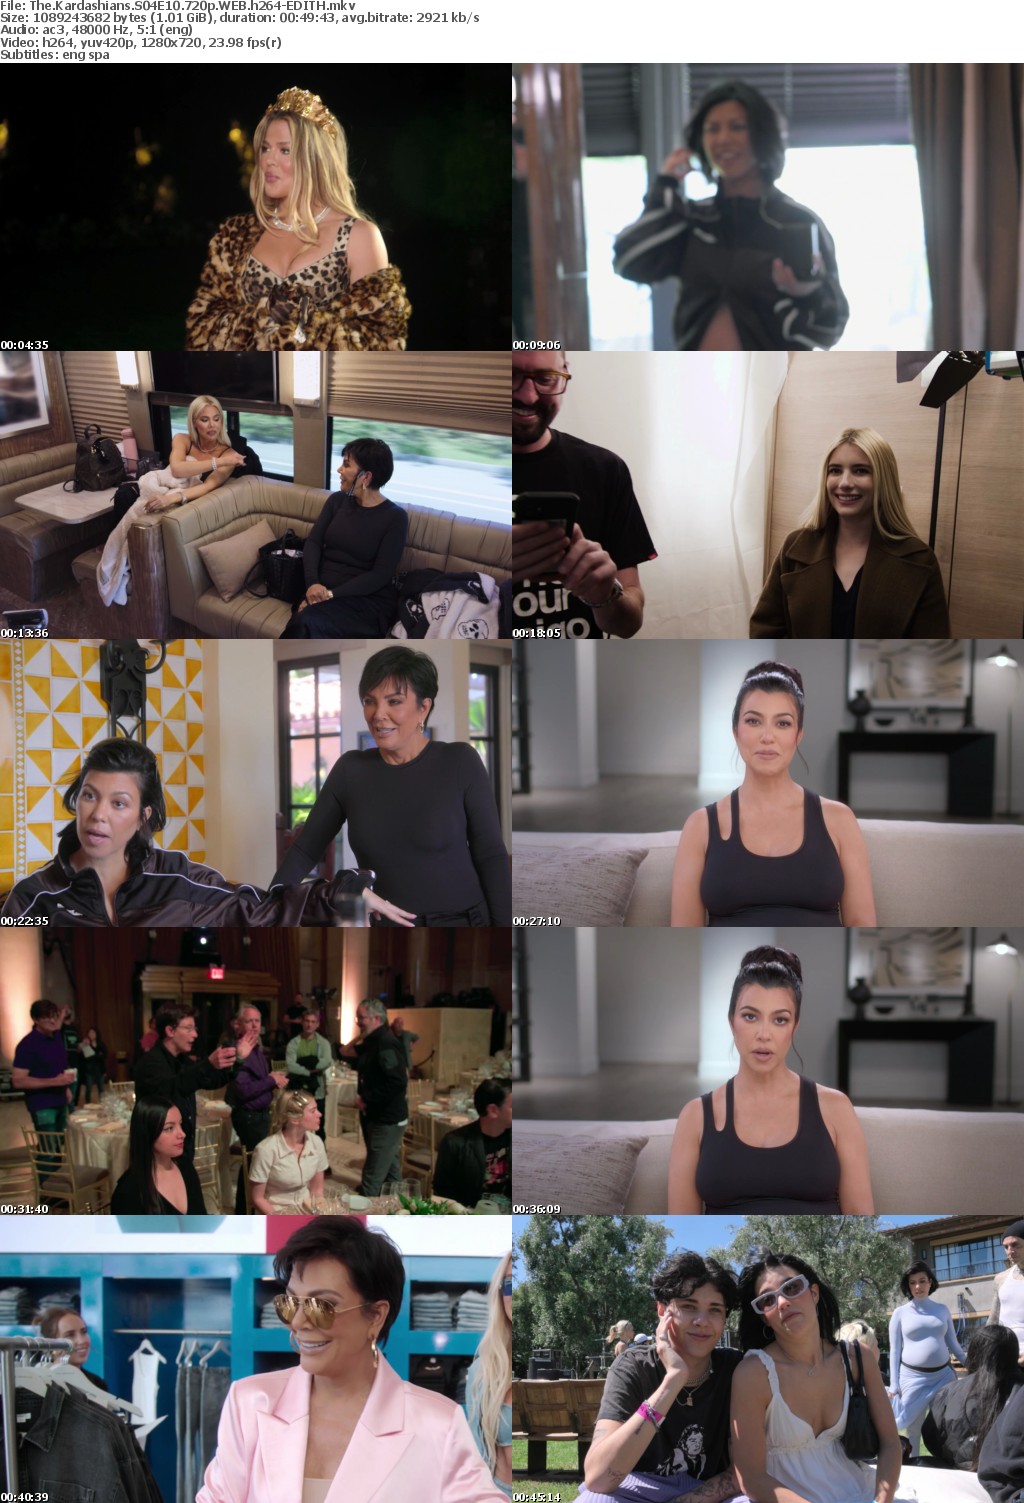 The Kardashians S04E10 720p WEB h264-EDITH